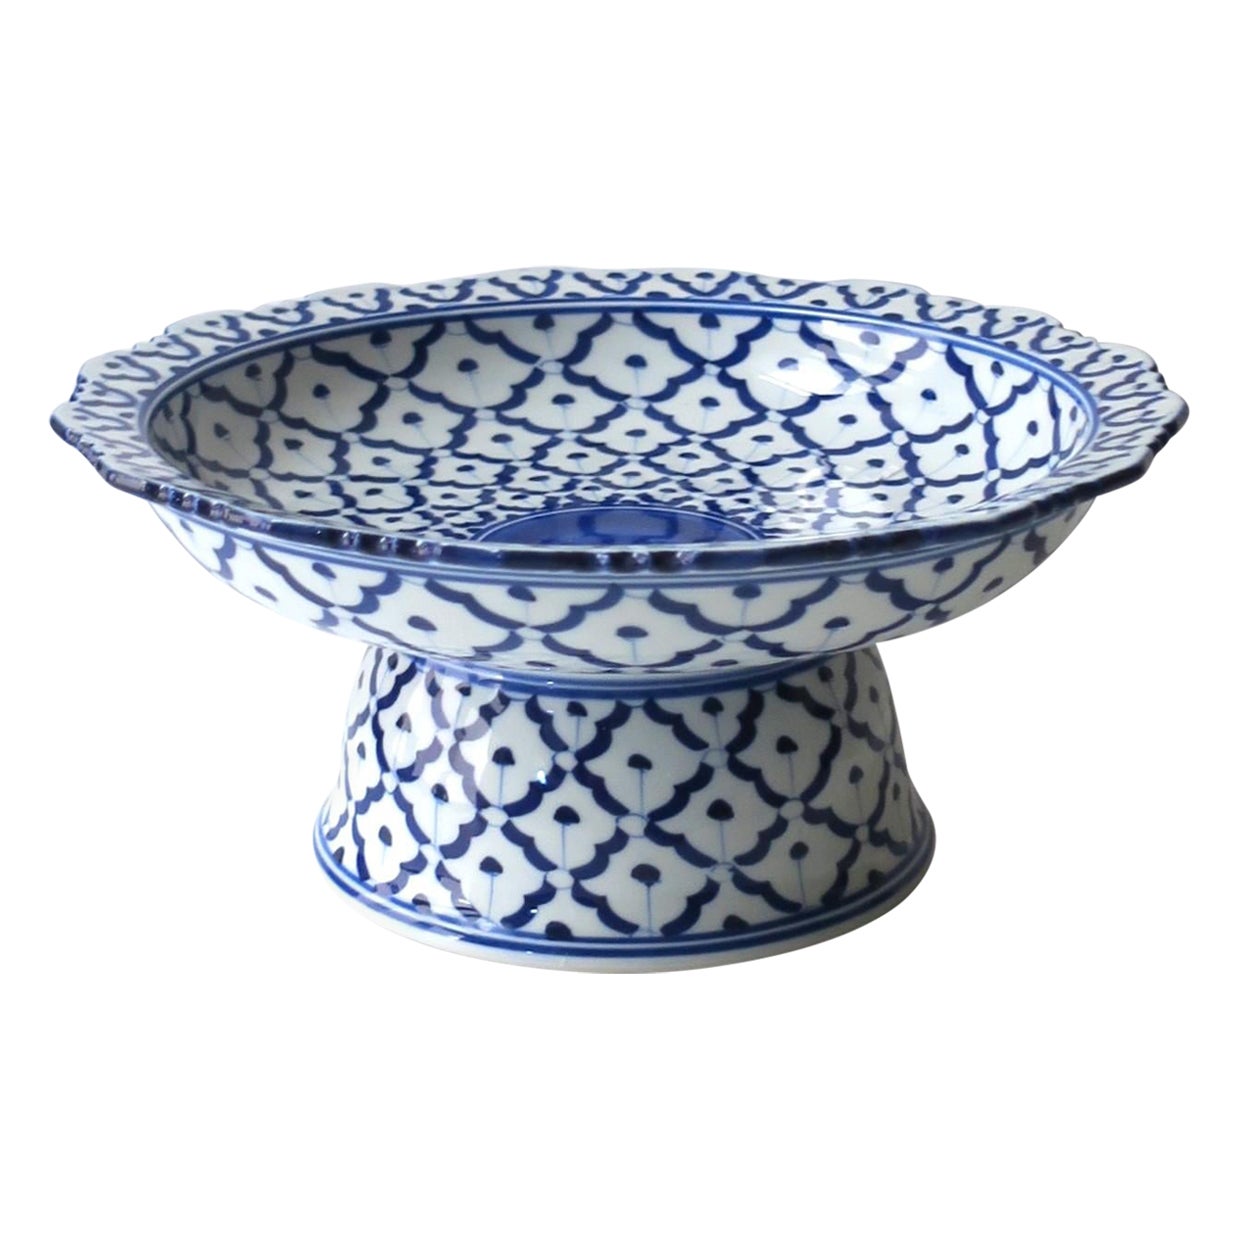 Blue and White Ceramic Centerpiece Bowl Compote 